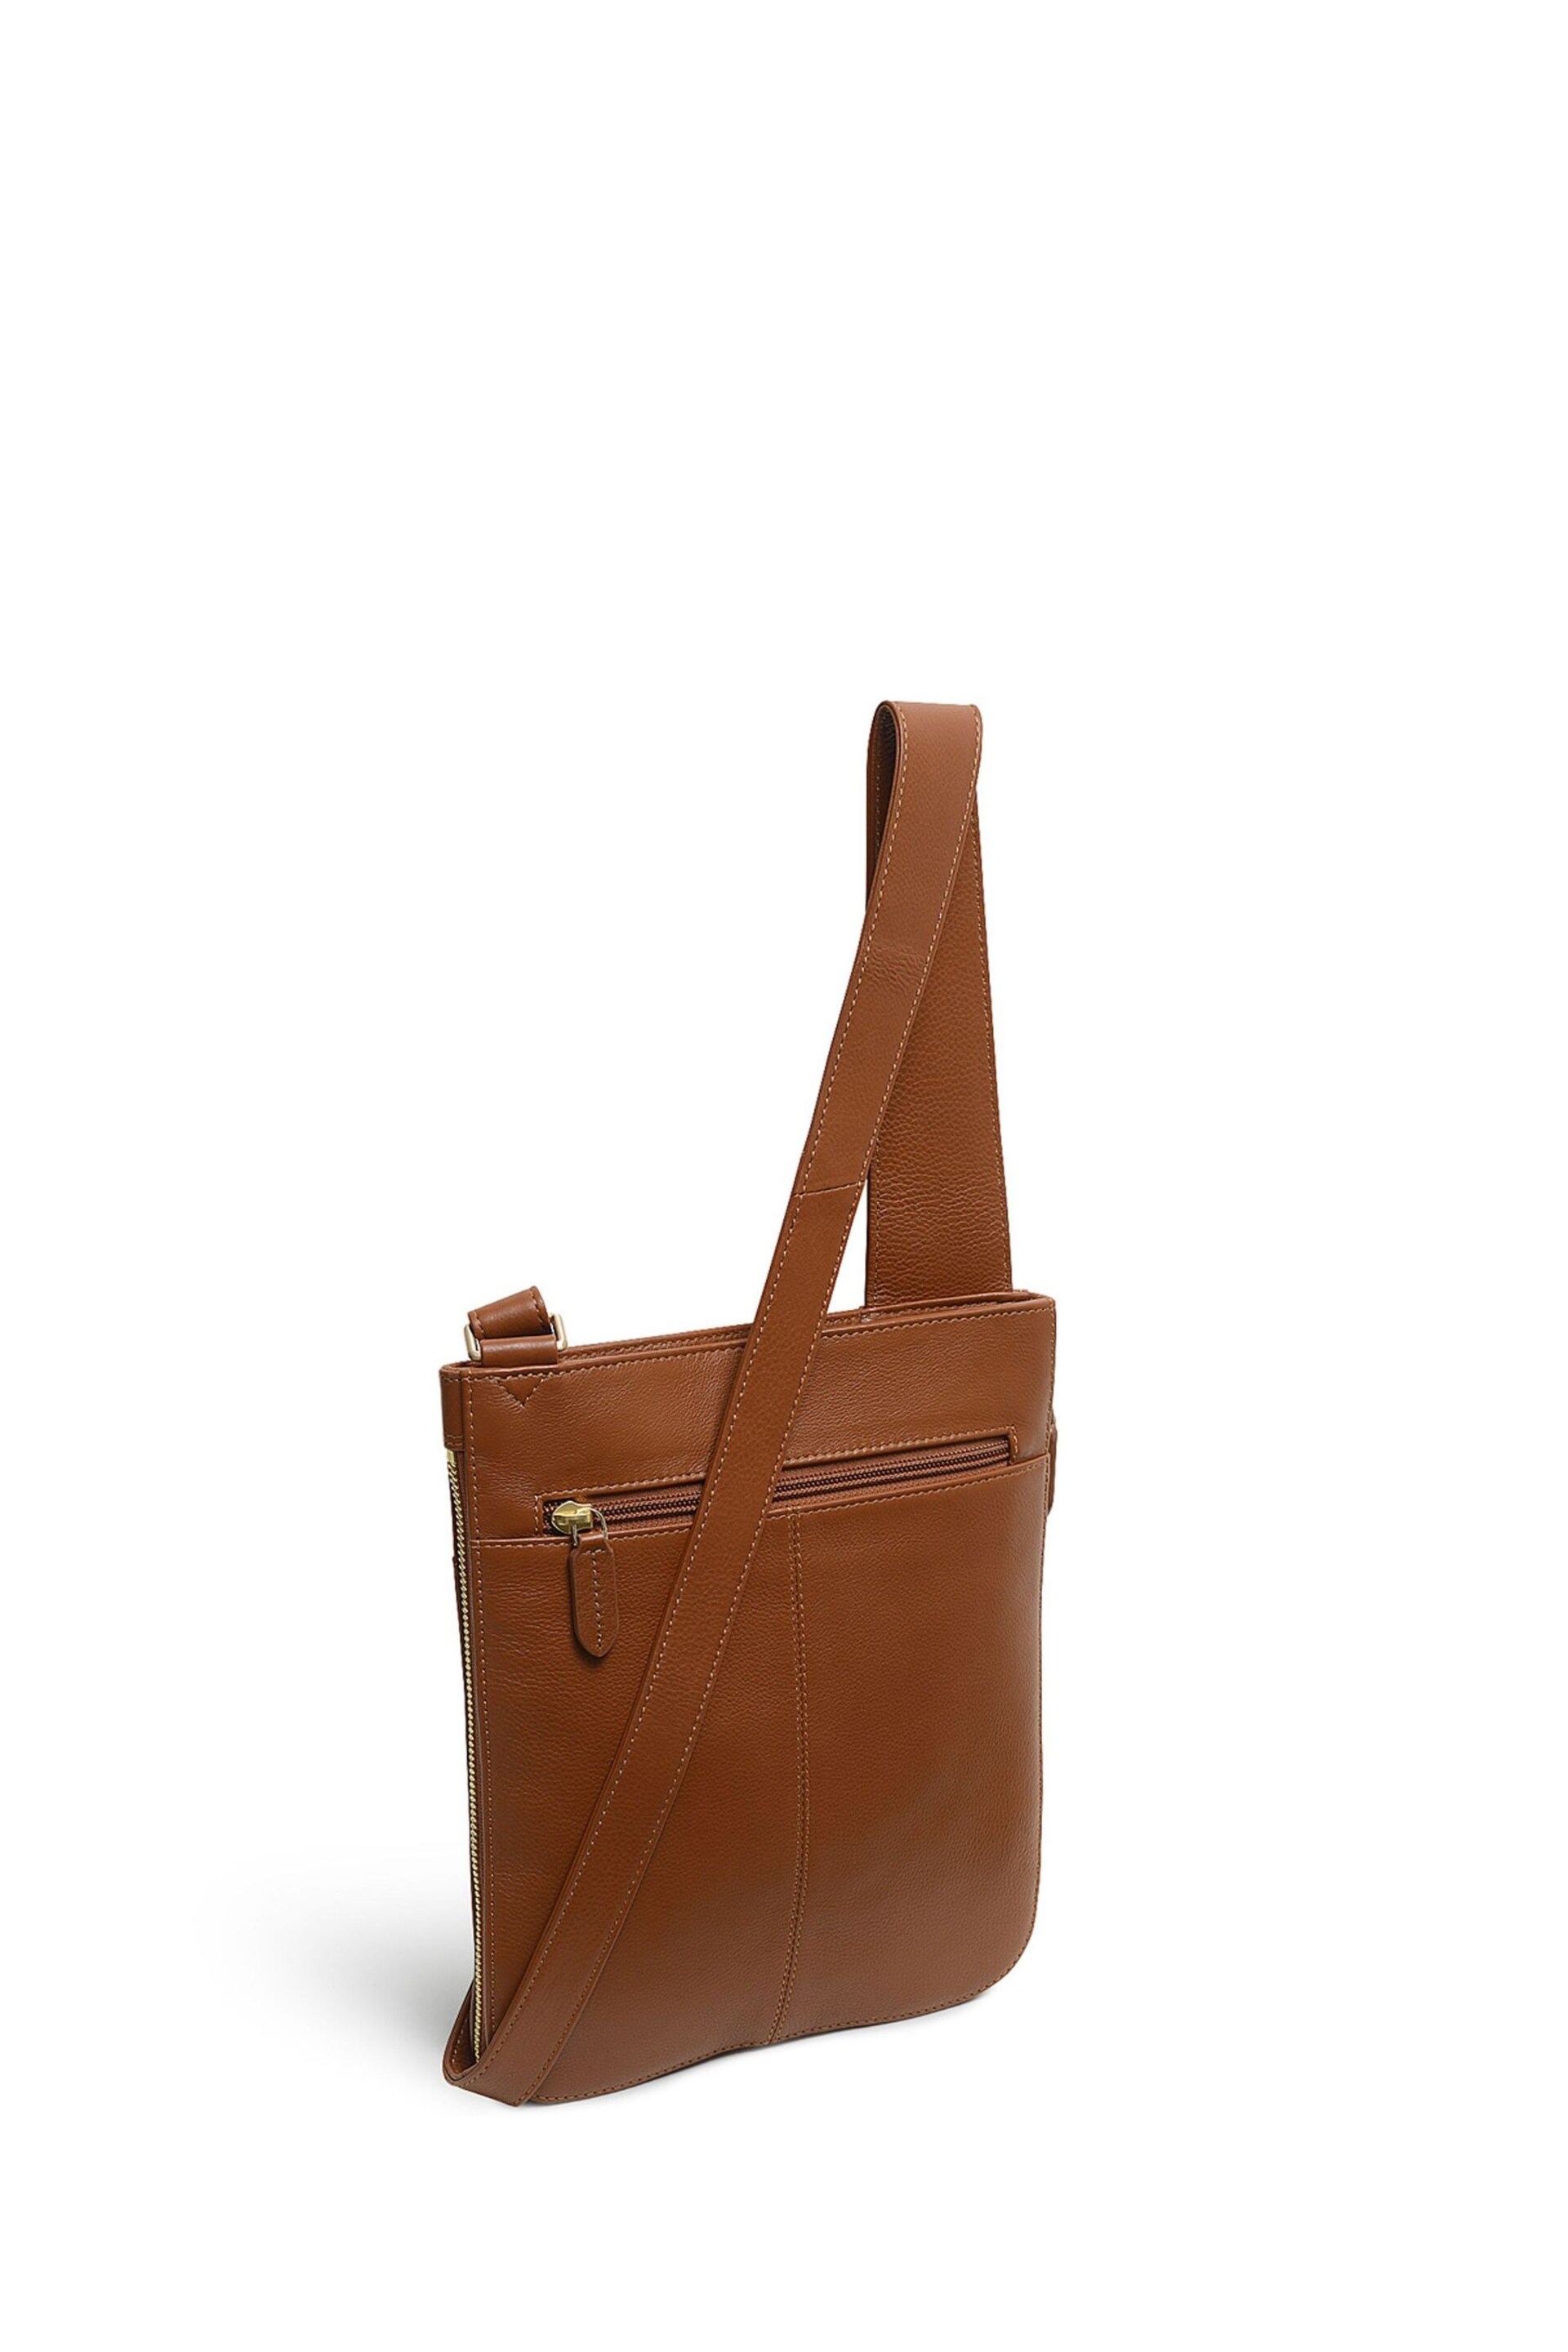 Radley London Medium Pockets Zip Around Cross-Body Brown Bag - Image 2 of 5